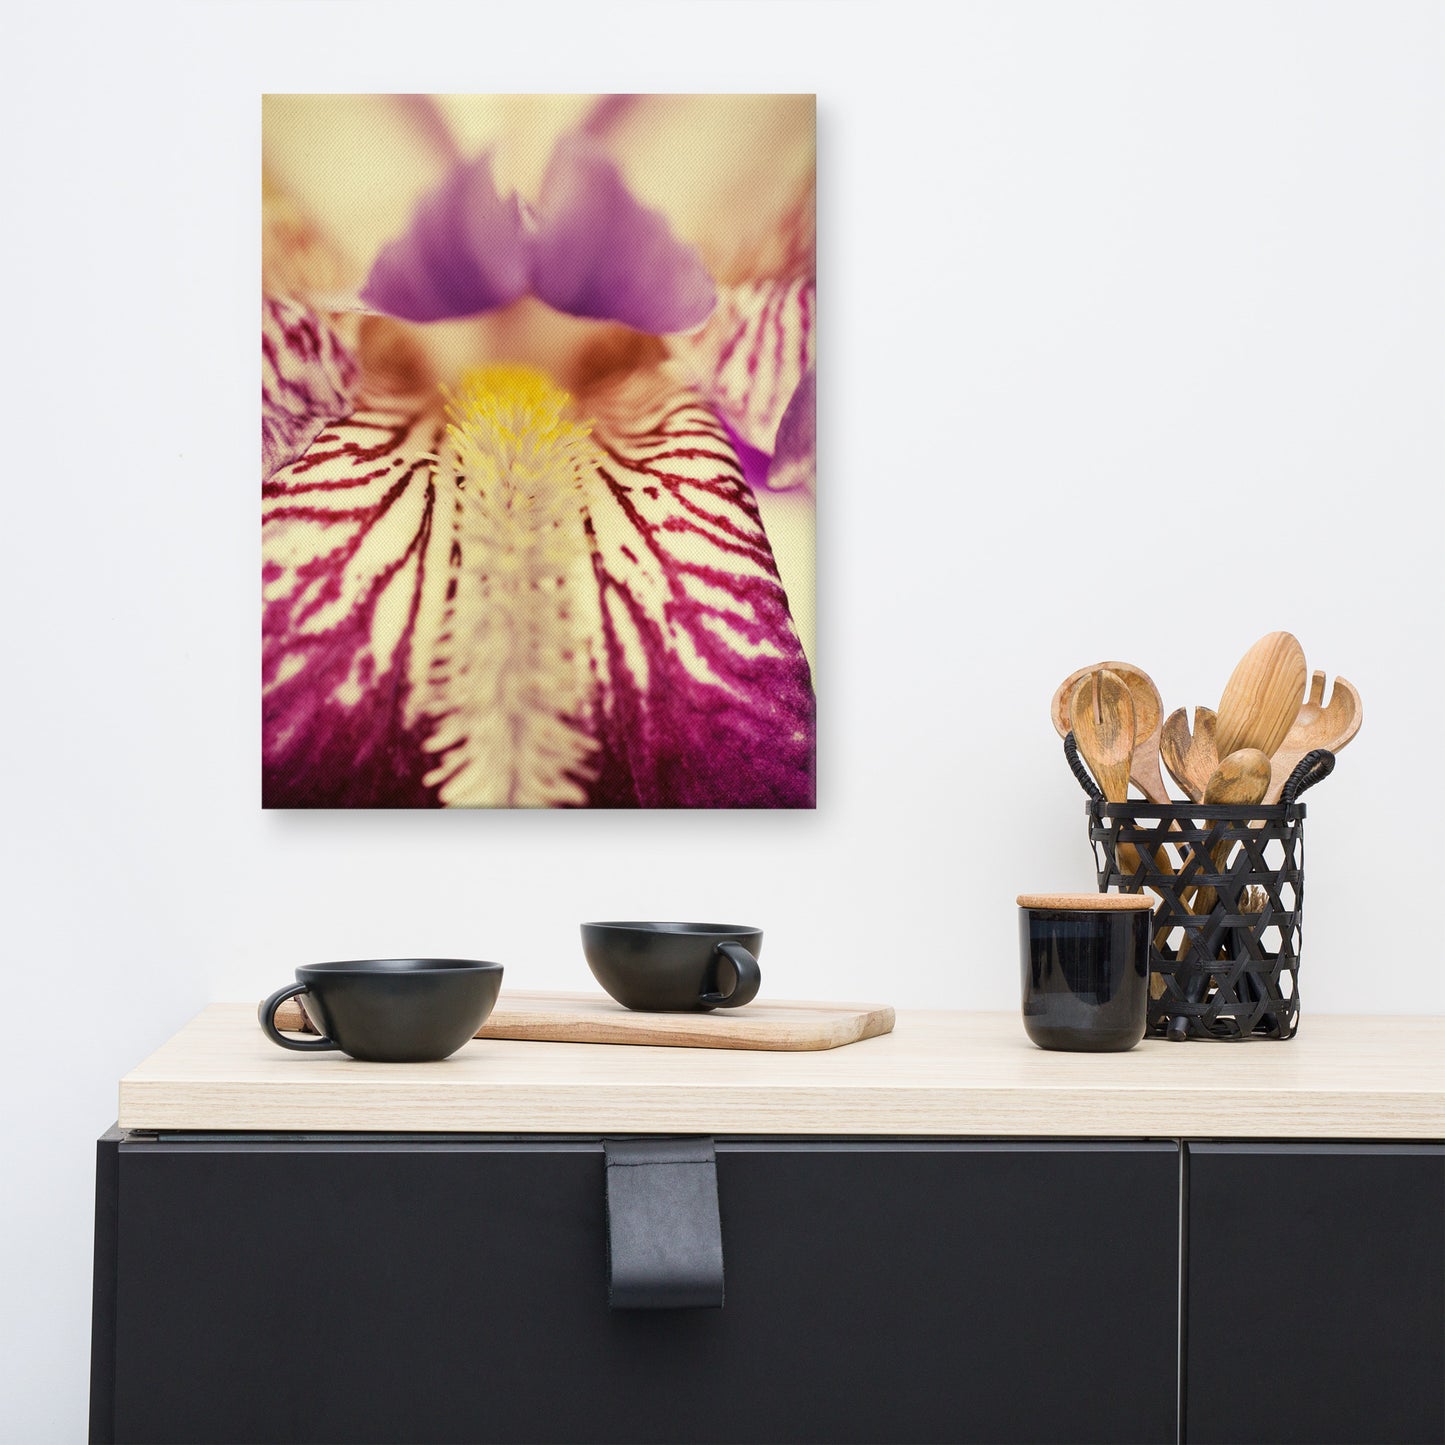 Canvas Pictures Flowers: Antiqued Iris - Botanical / Floral / Flora / Flowers / Nature Photograph Canvas Wall Art Print - Artwork